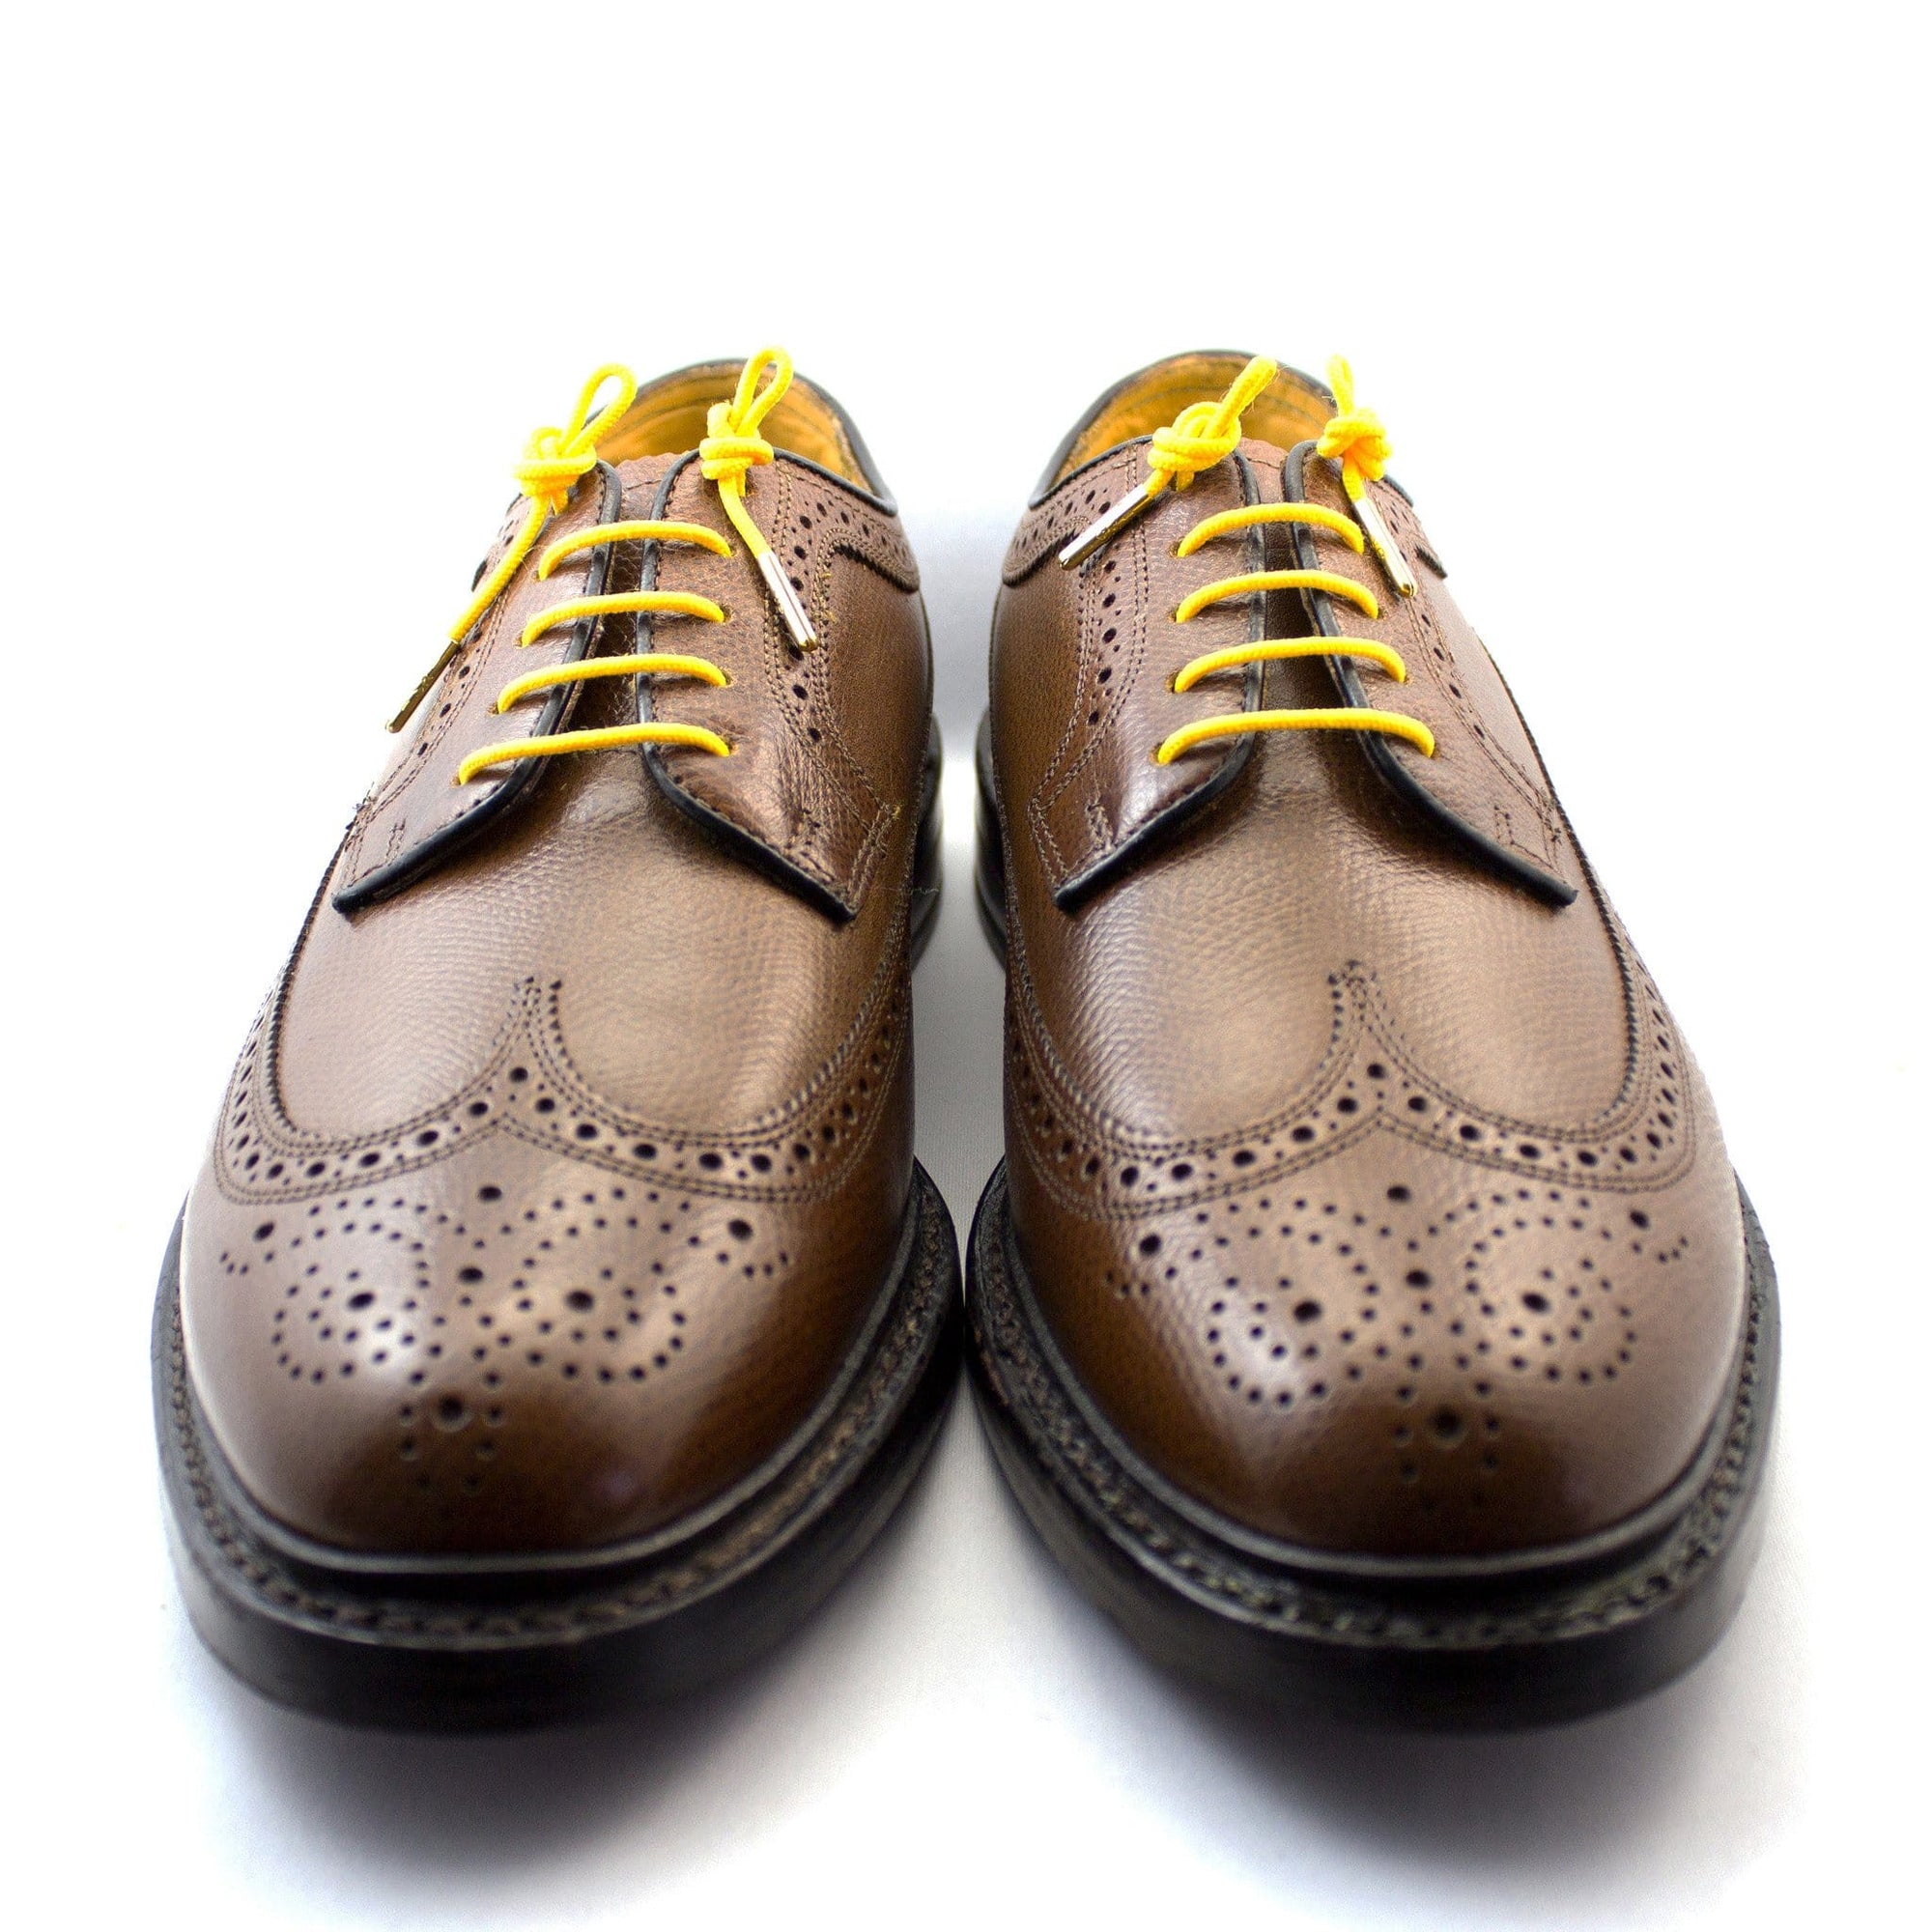 Yellow laces for dress shoes, Length: 27"/69cm-Stolen Riches